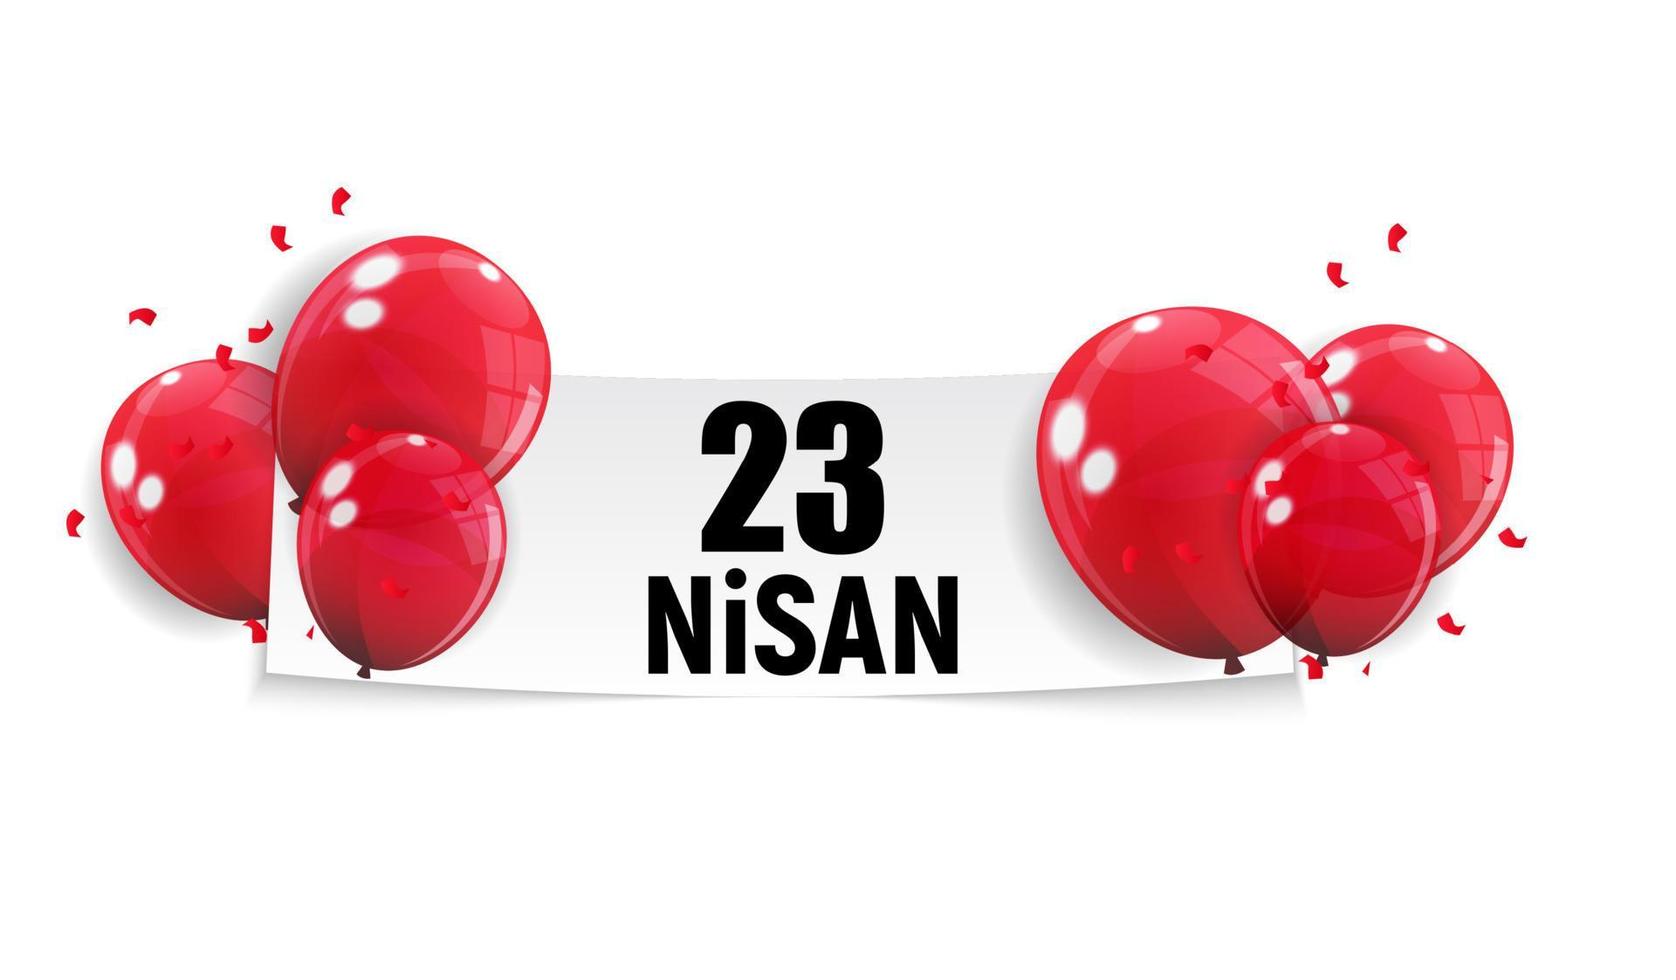 23 aprile festa dei bambini. 23 nisan cumhuriyet bayrami. illustrazione vettoriale